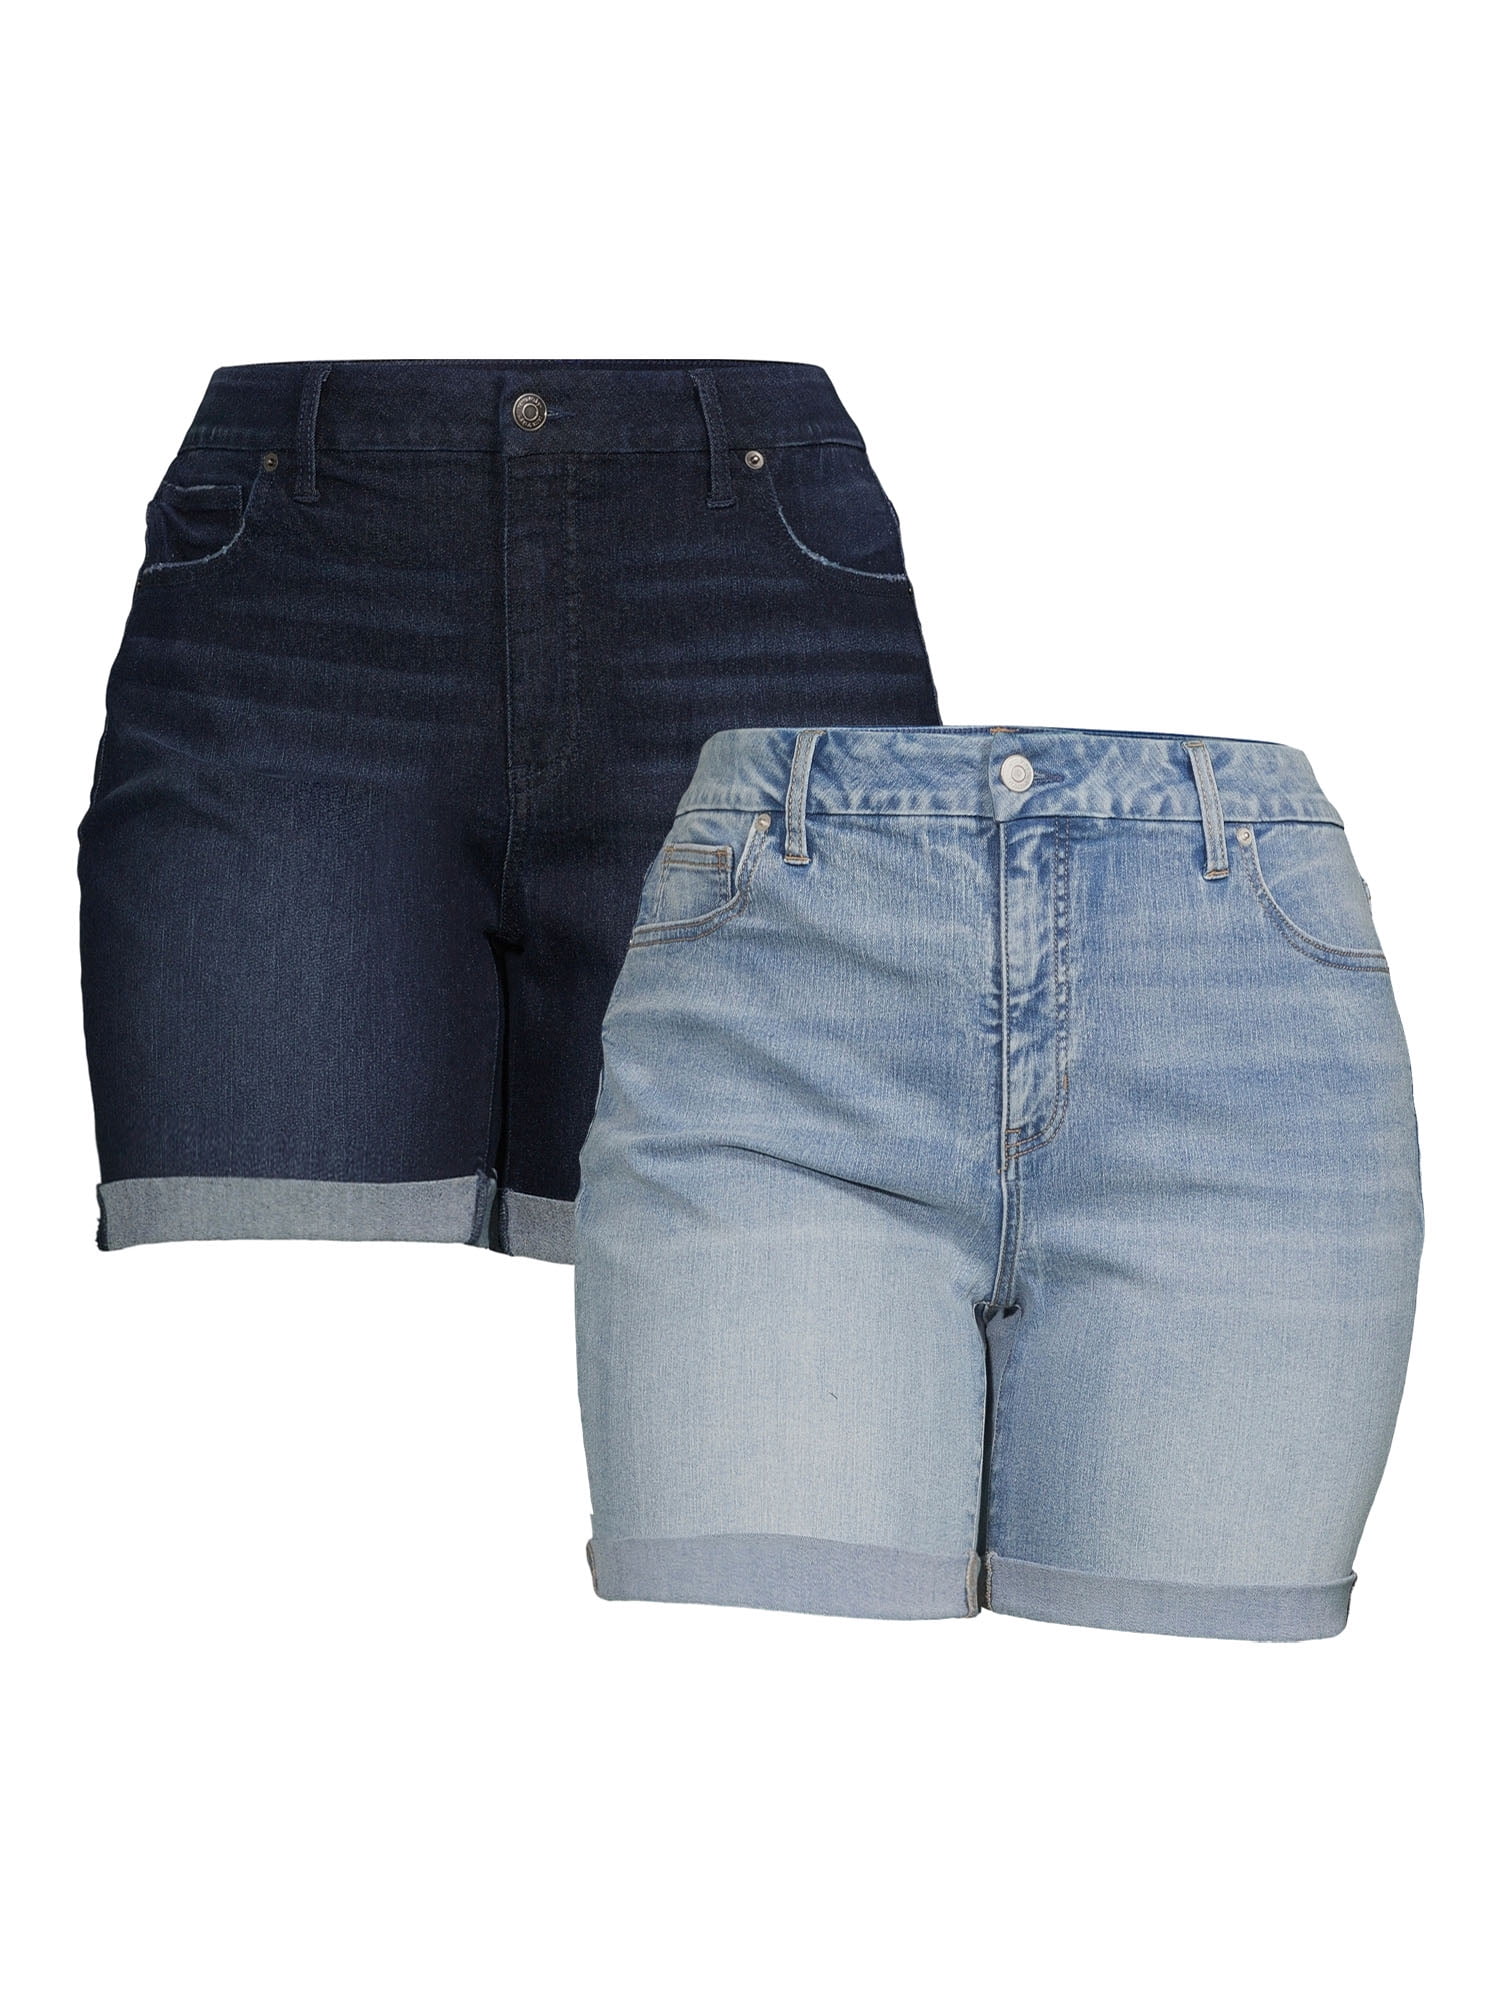 H&M Curvy Fit Bermuda High Denim Shorts | Kingsway Mall